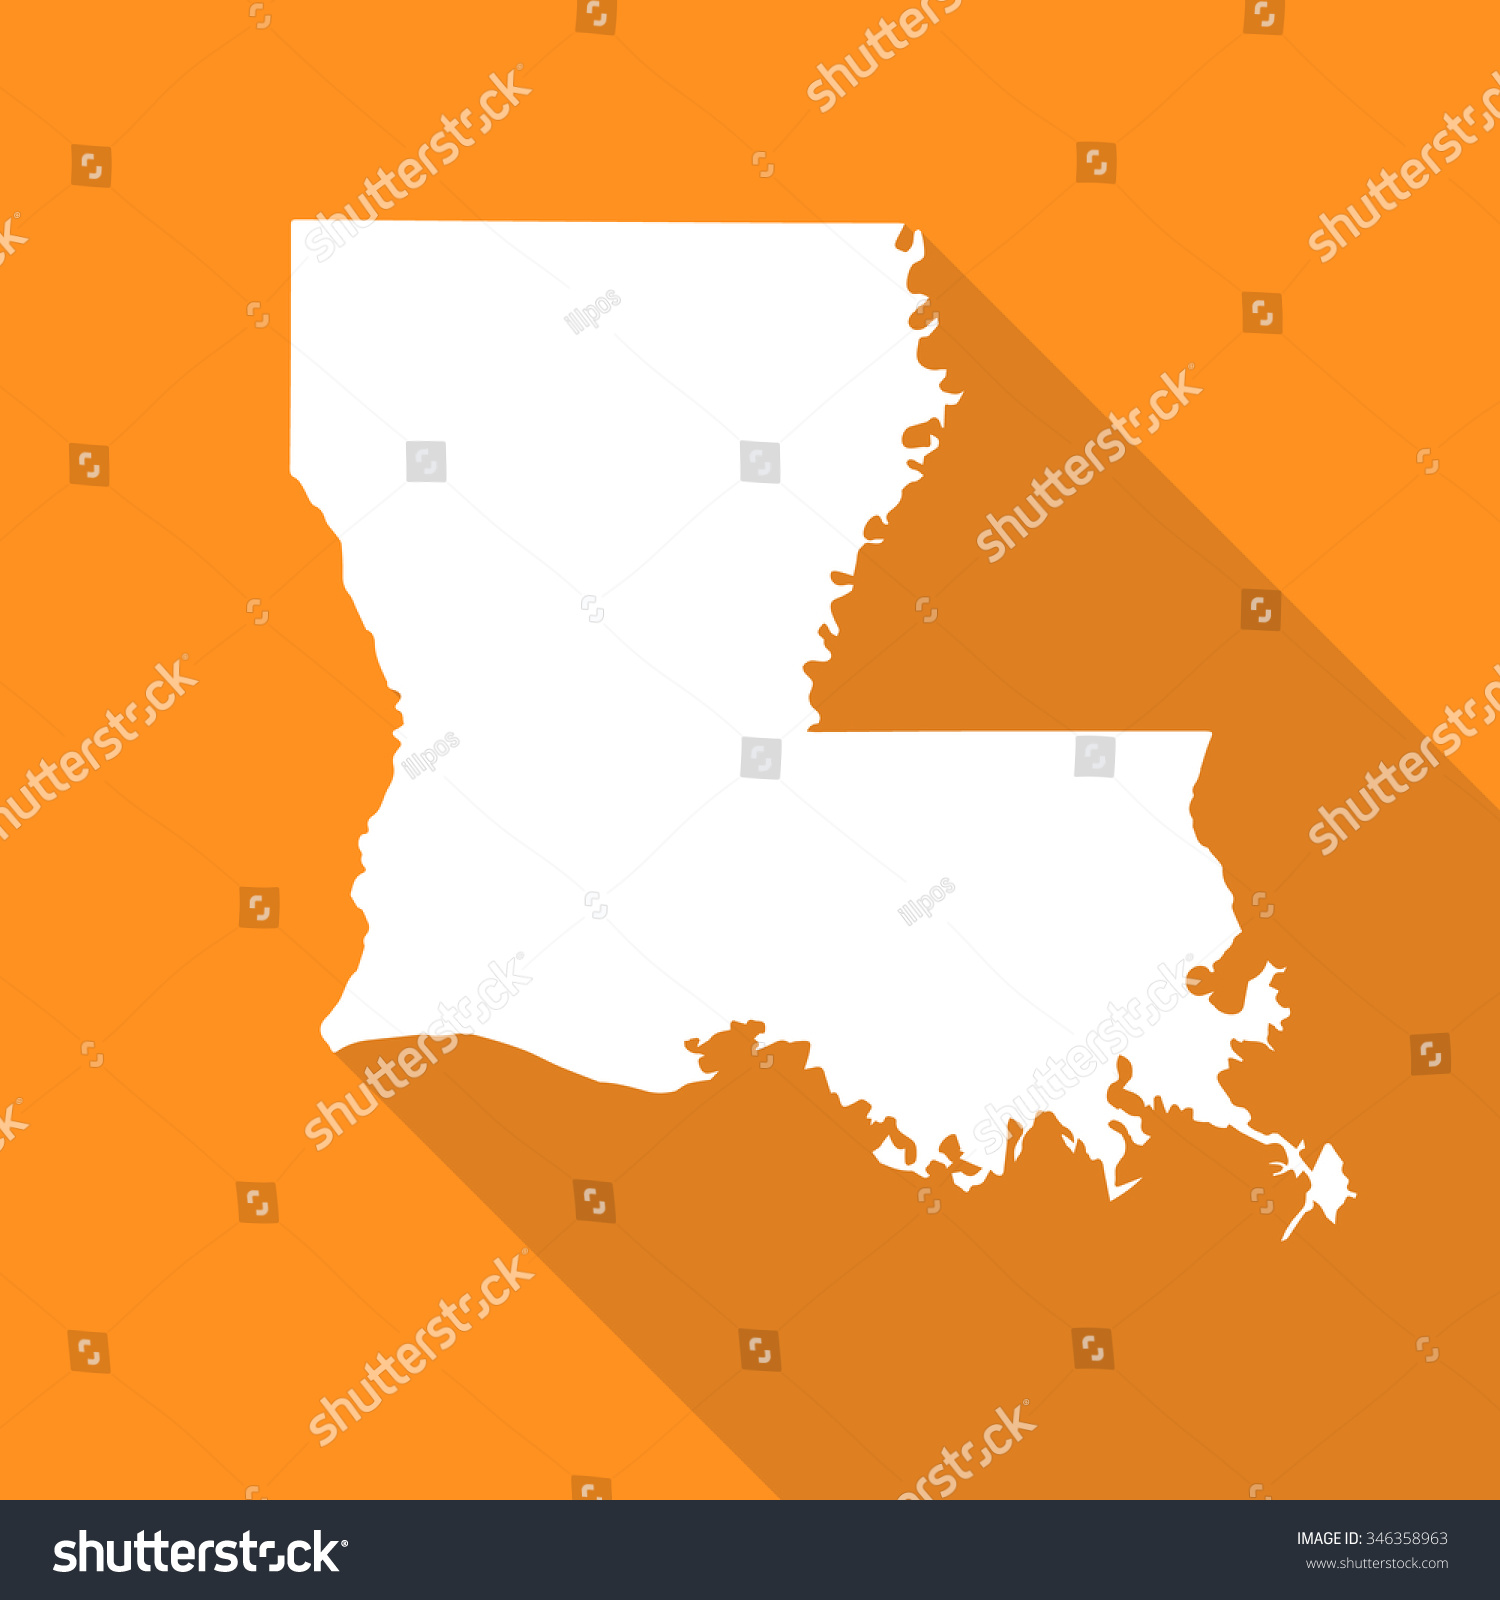 Louisiana white map,border flat simple style with long shadow on orange background #346358963